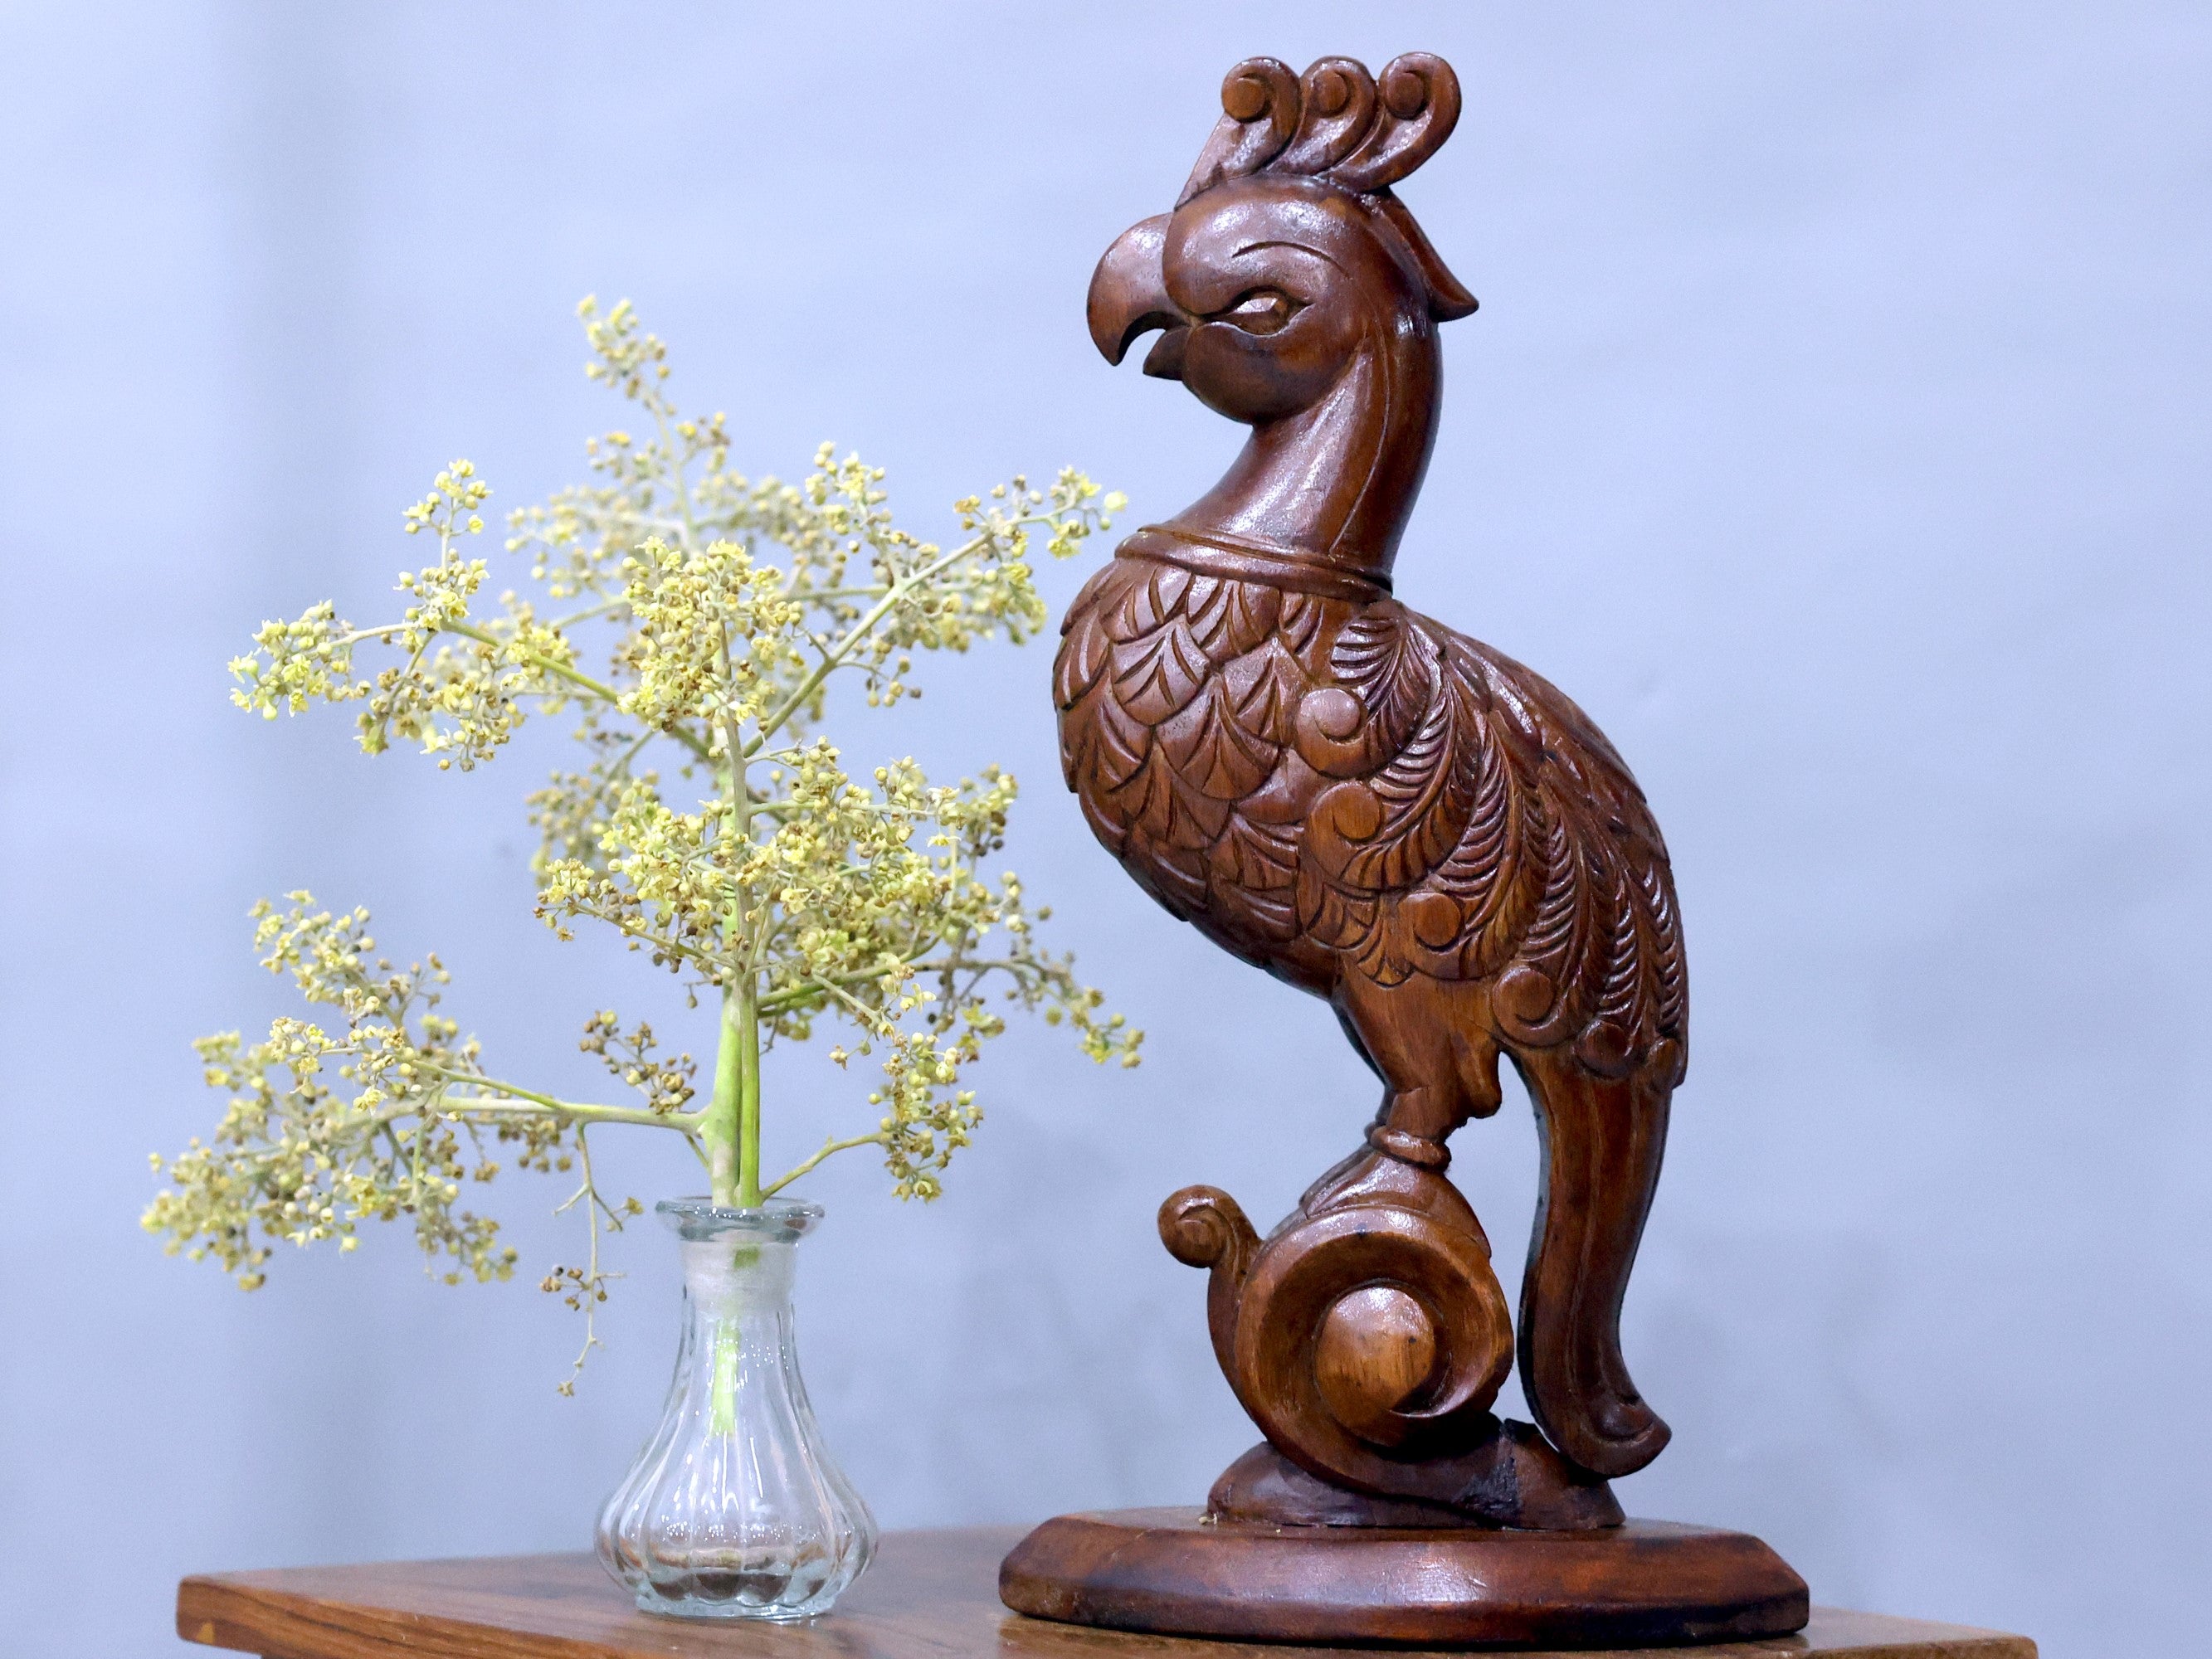 Wooden Beautifully Carved Bird Animal Figurine